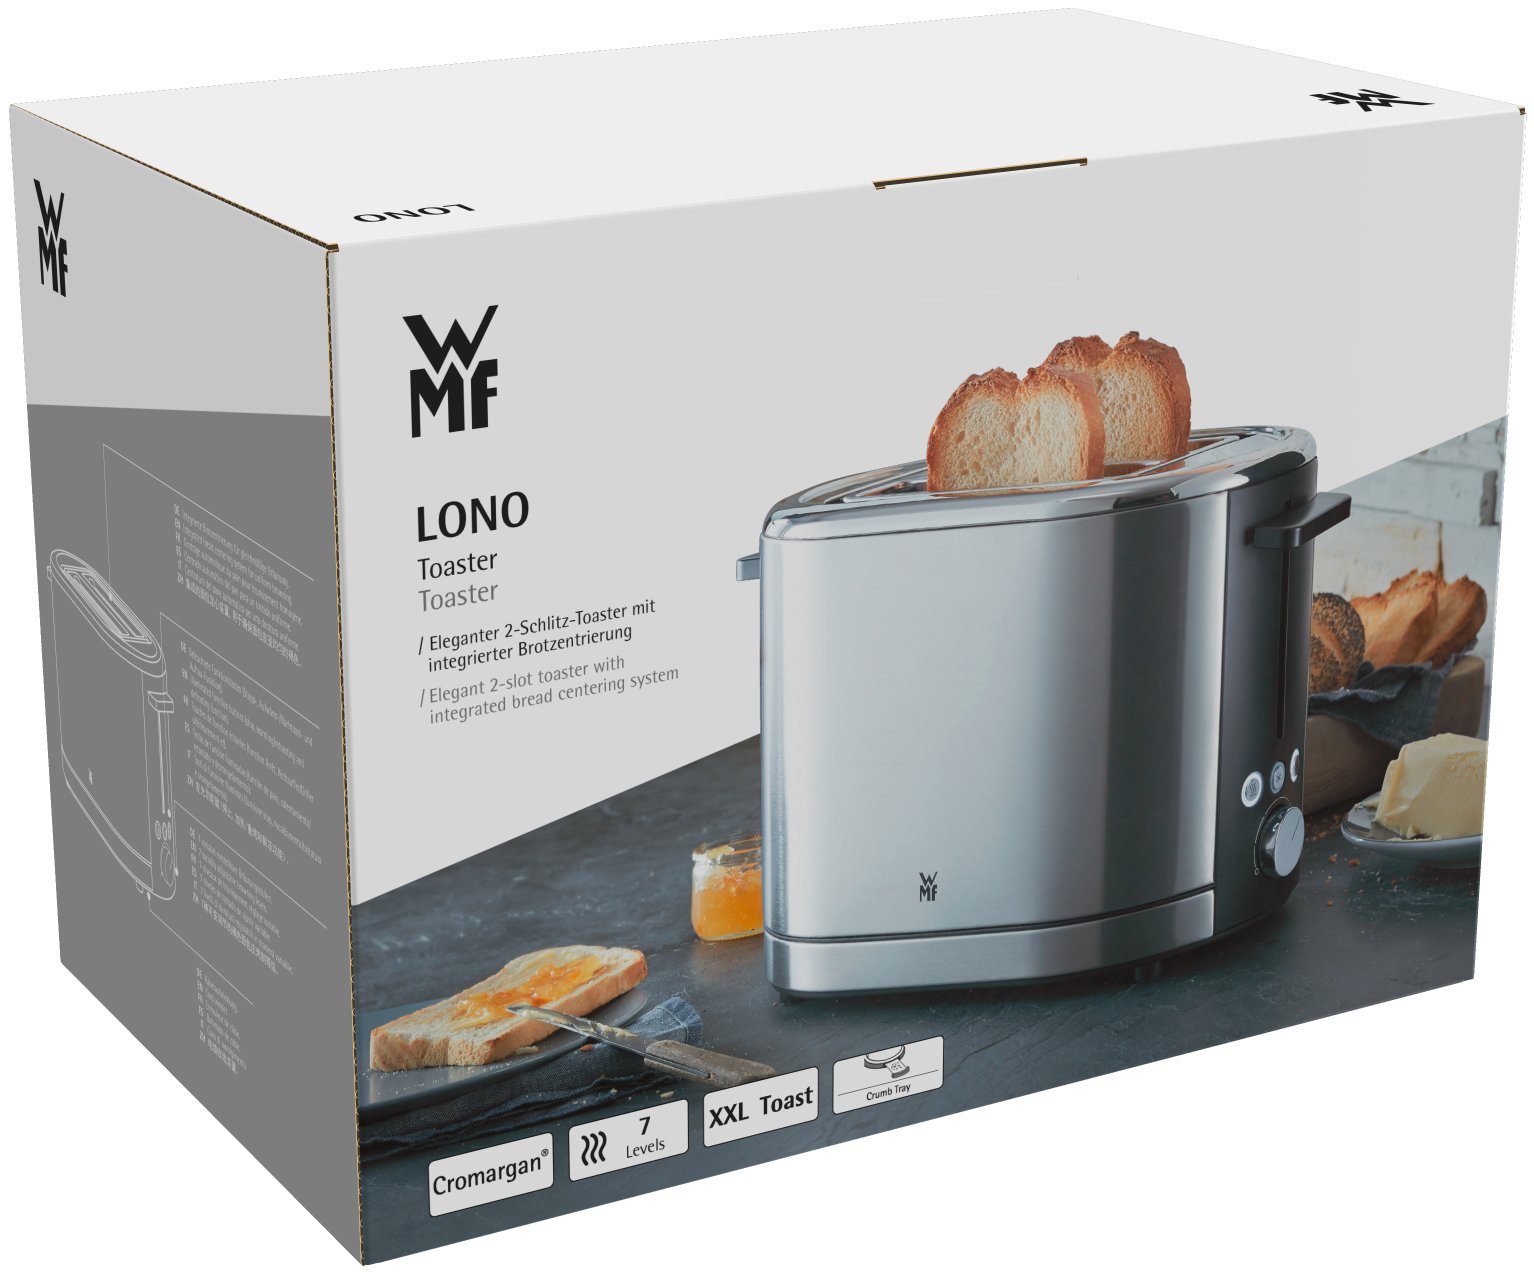 WNF Электрический тостер Lono (0414090011) WMF - spb.v-b.ru